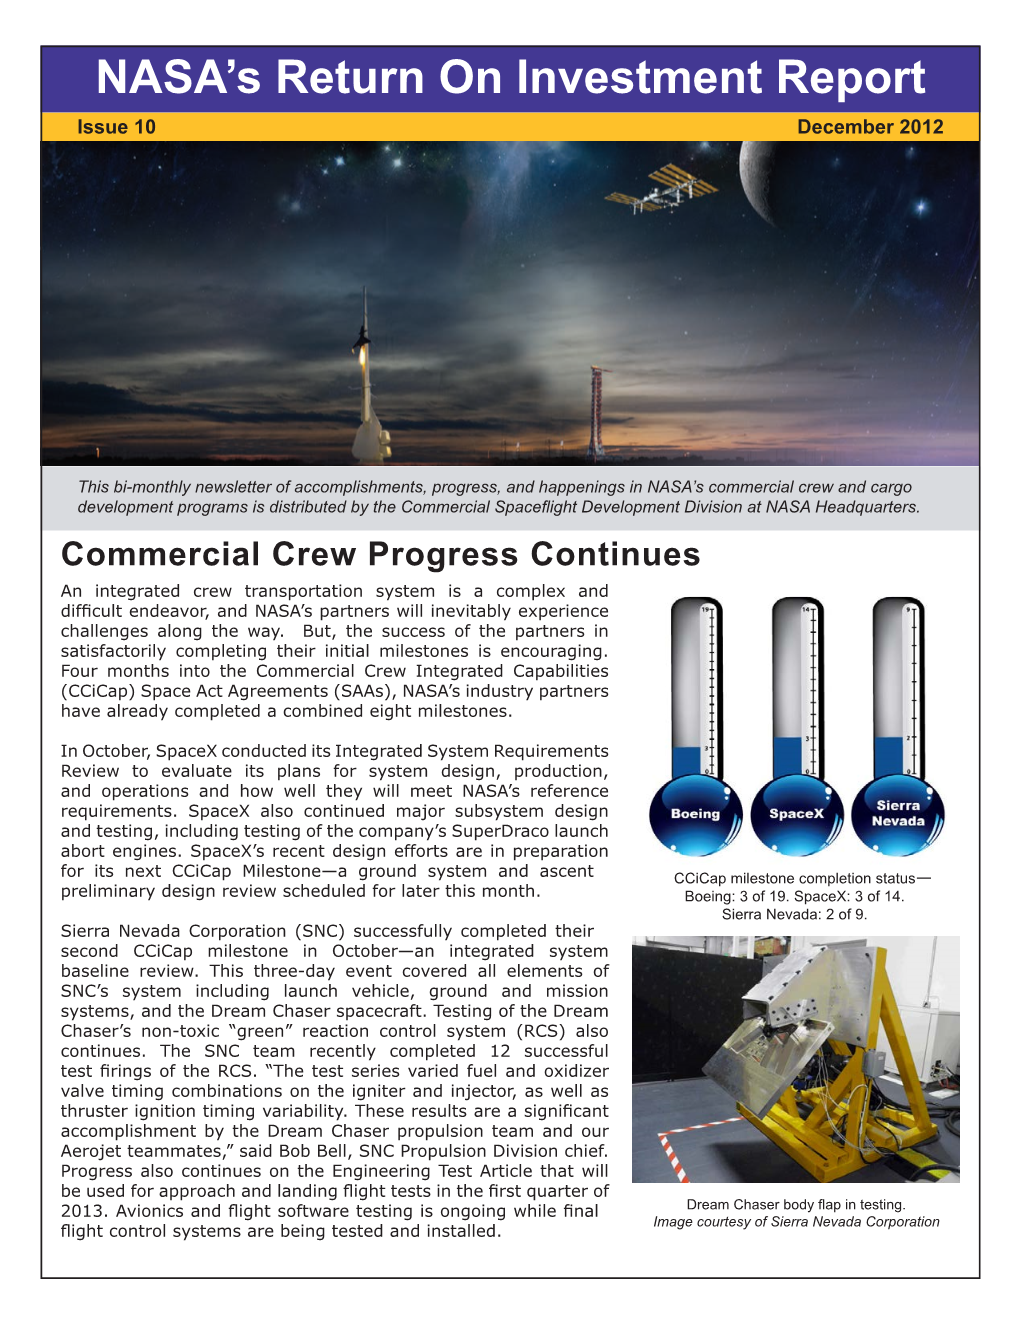 NASA's Return on Investment Report